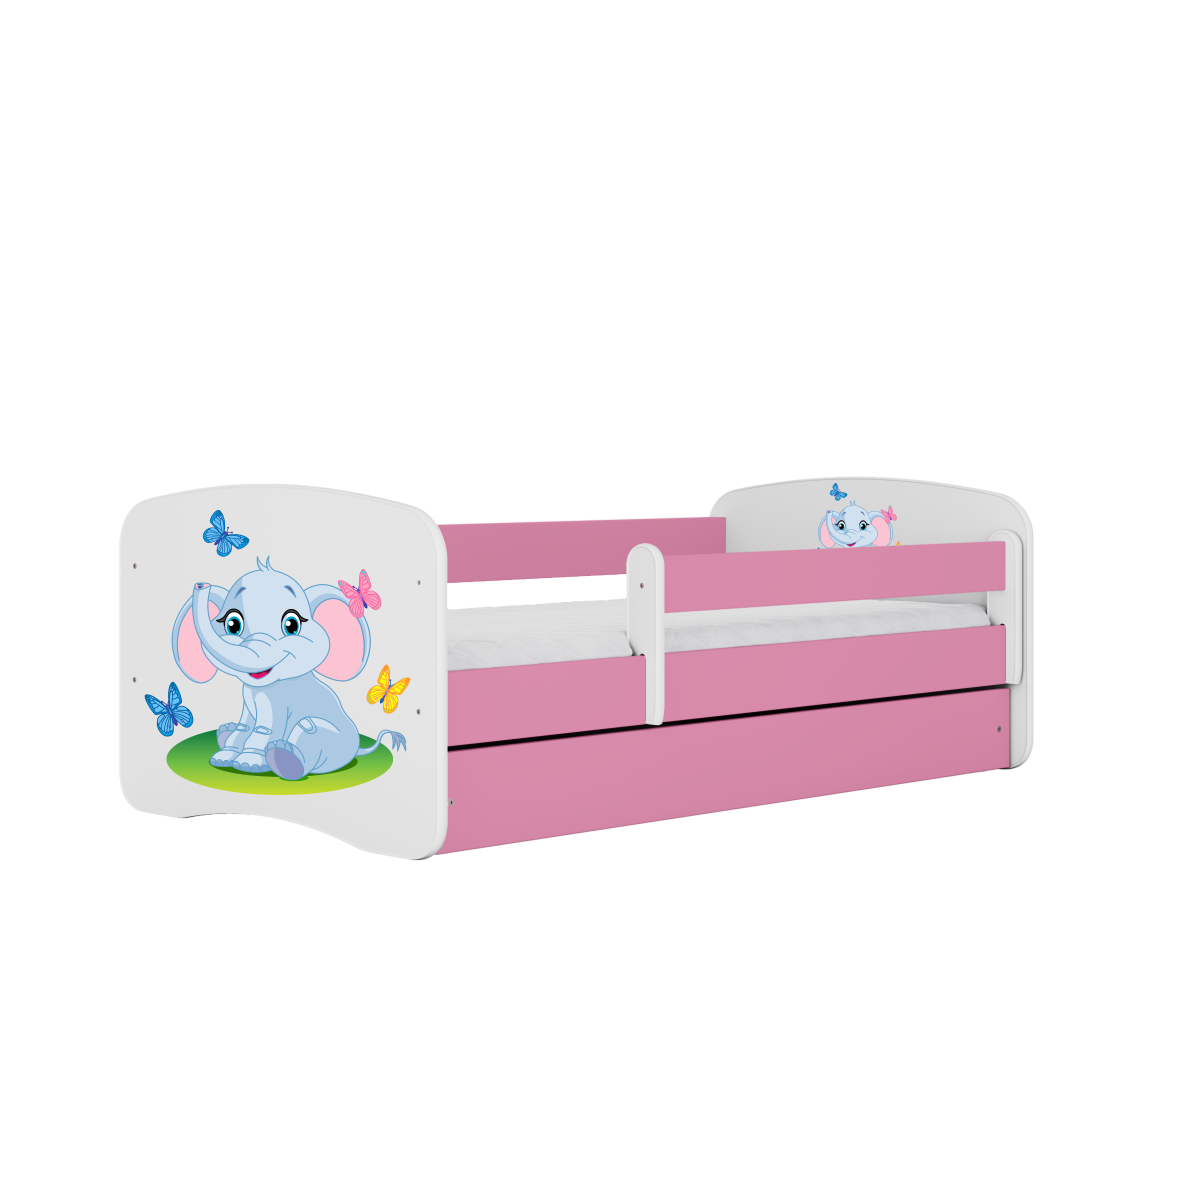 Detská posteľ Babydreams slon s motýlikmi ružová